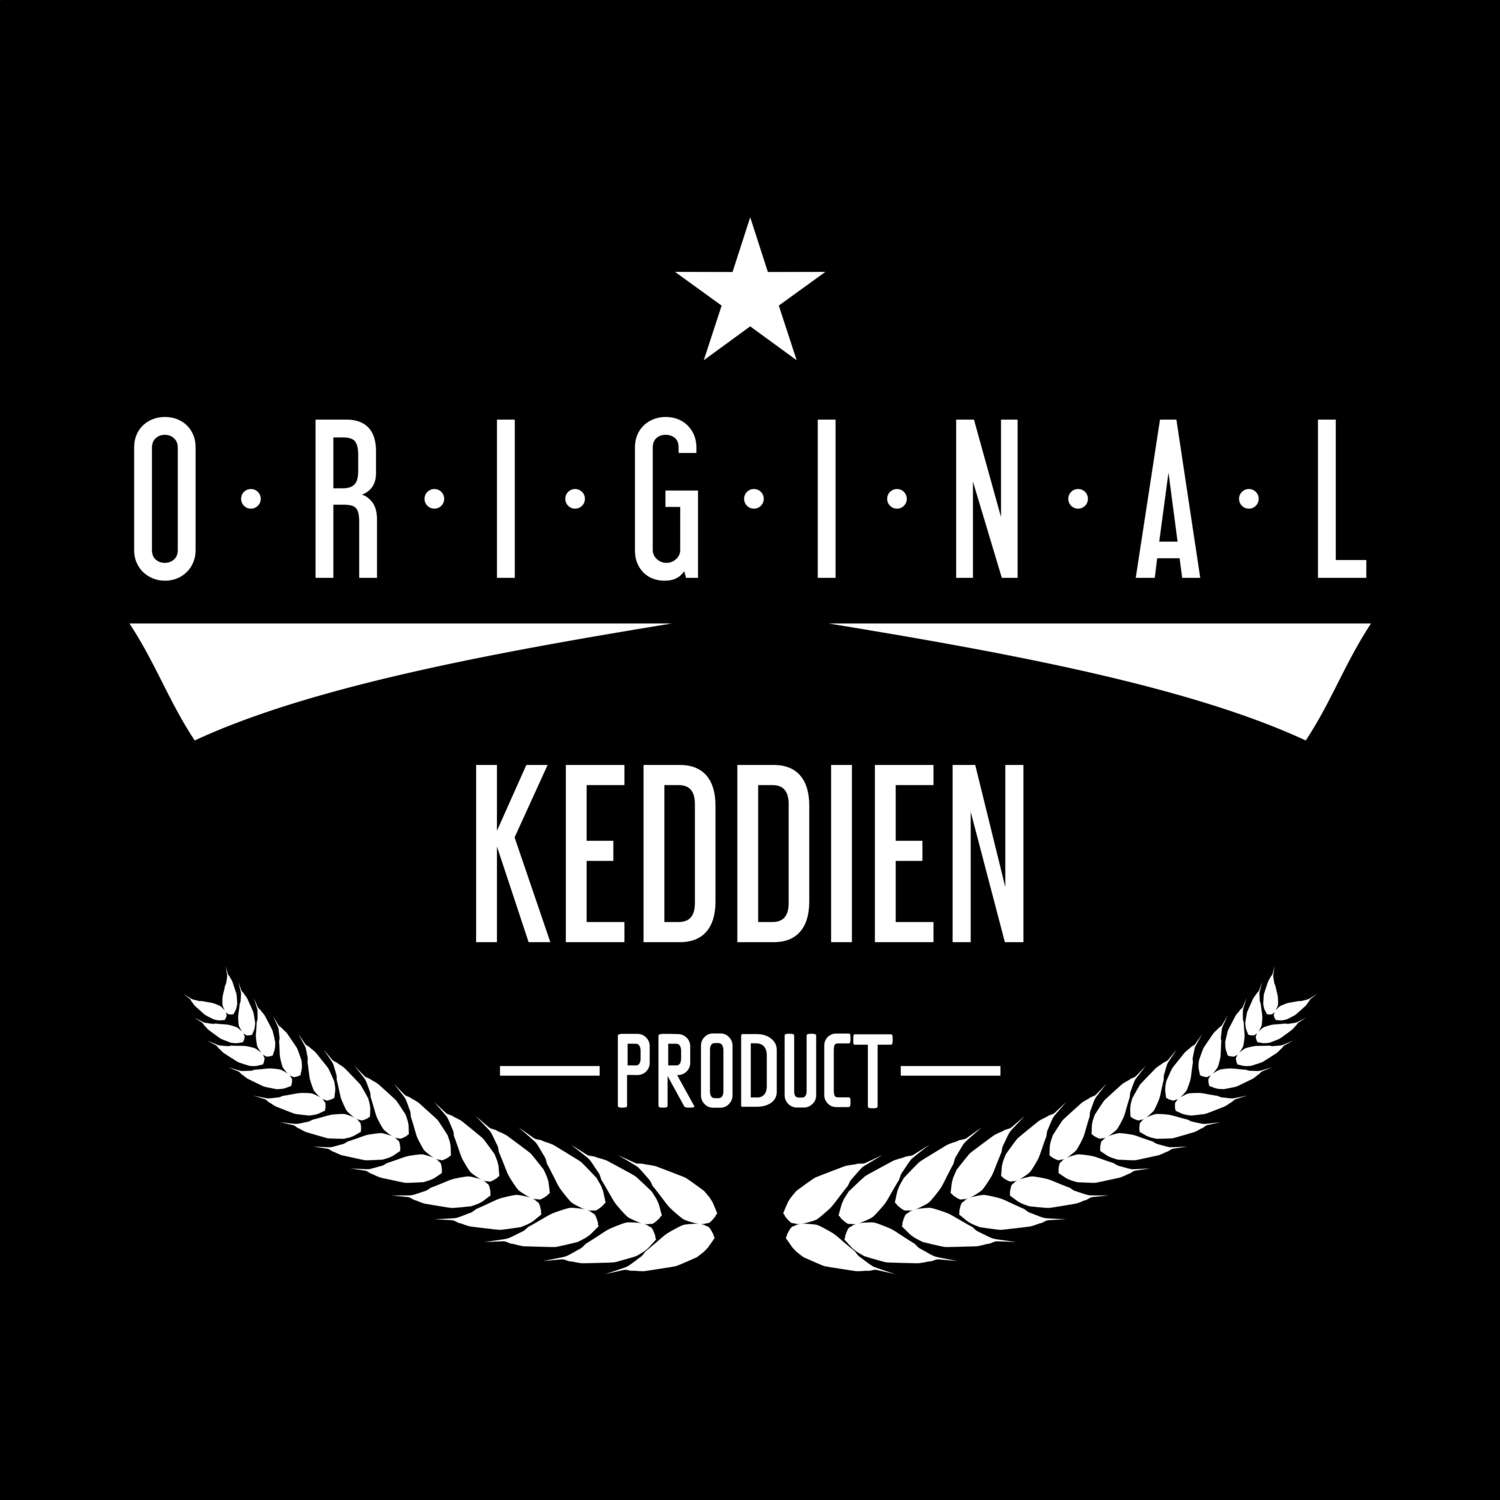 Keddien T-Shirt »Original Product«